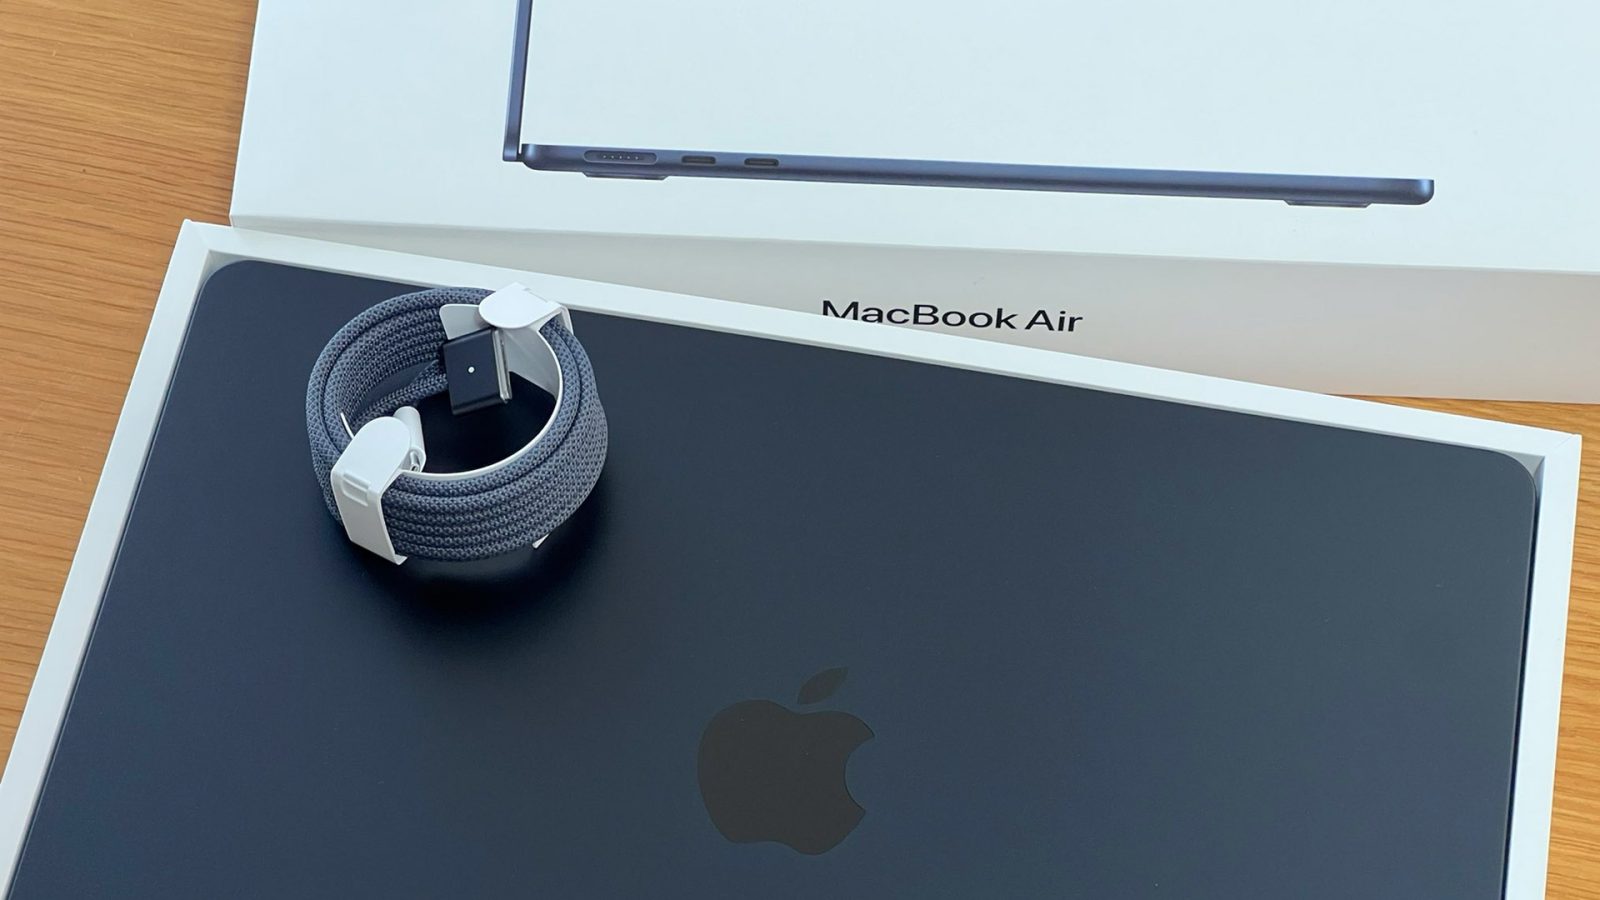 M2 MacBook Air stars in unboxing and teardown photos ahead of